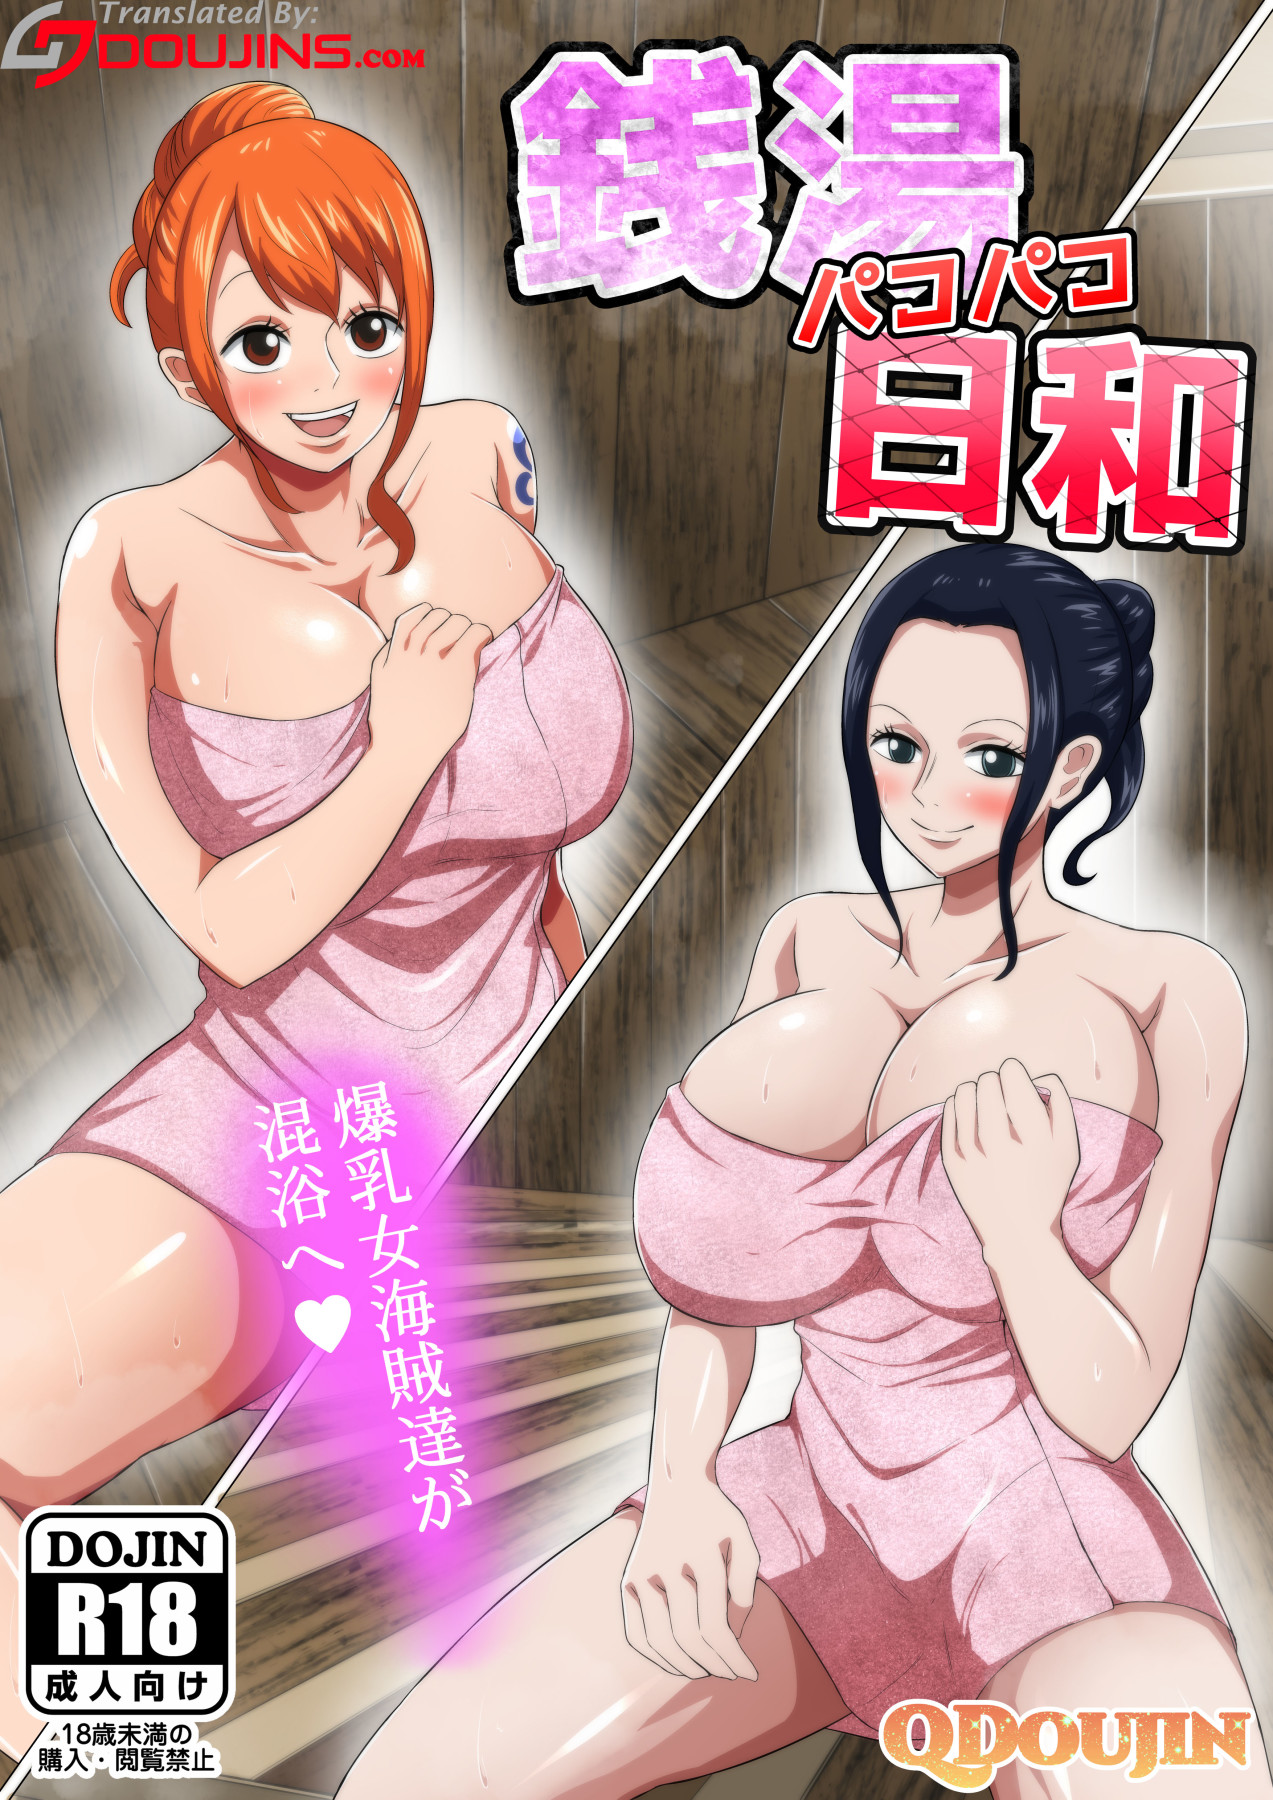 Hentai Manga Comic-v22m-A Good  Day To Visit The Bathhouse-Read-1